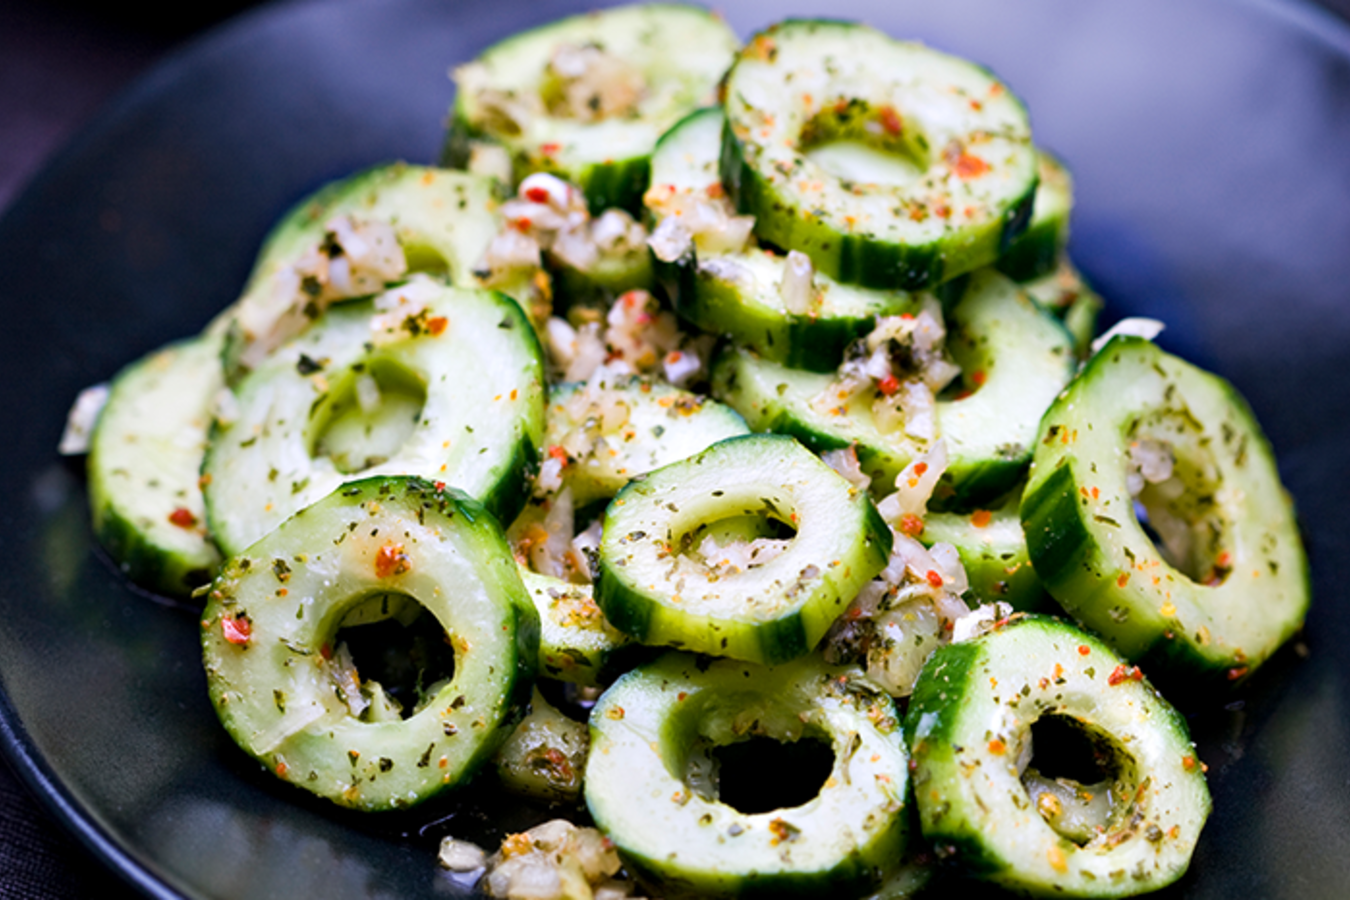 Chili ginger Cucumber Salad